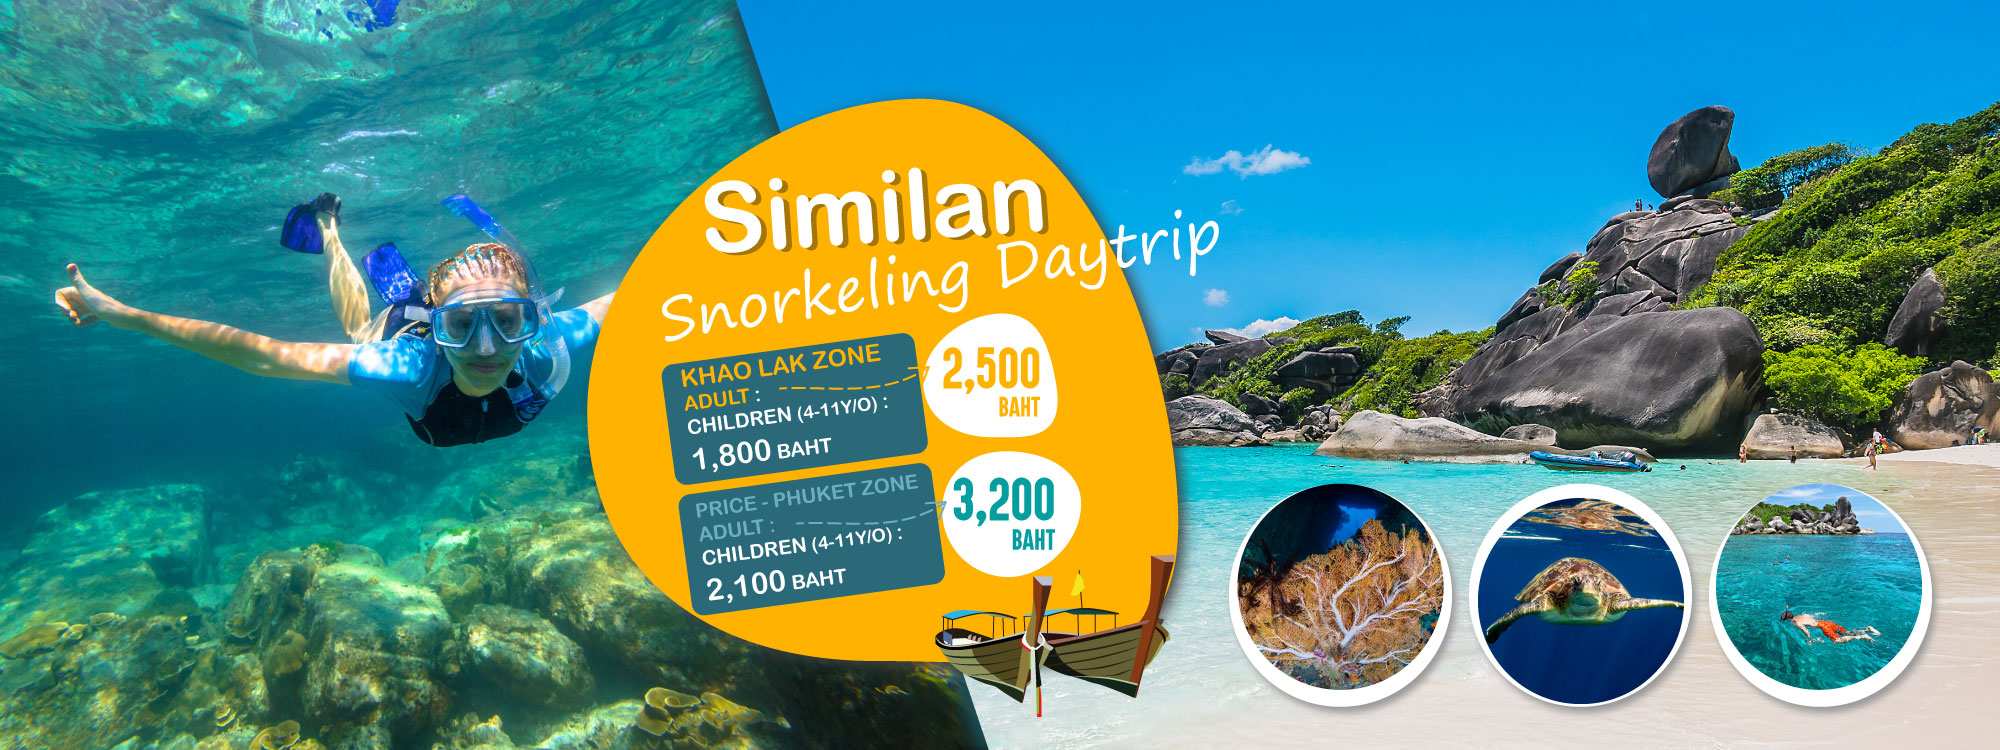 Similan Snorkeling Tour Packages